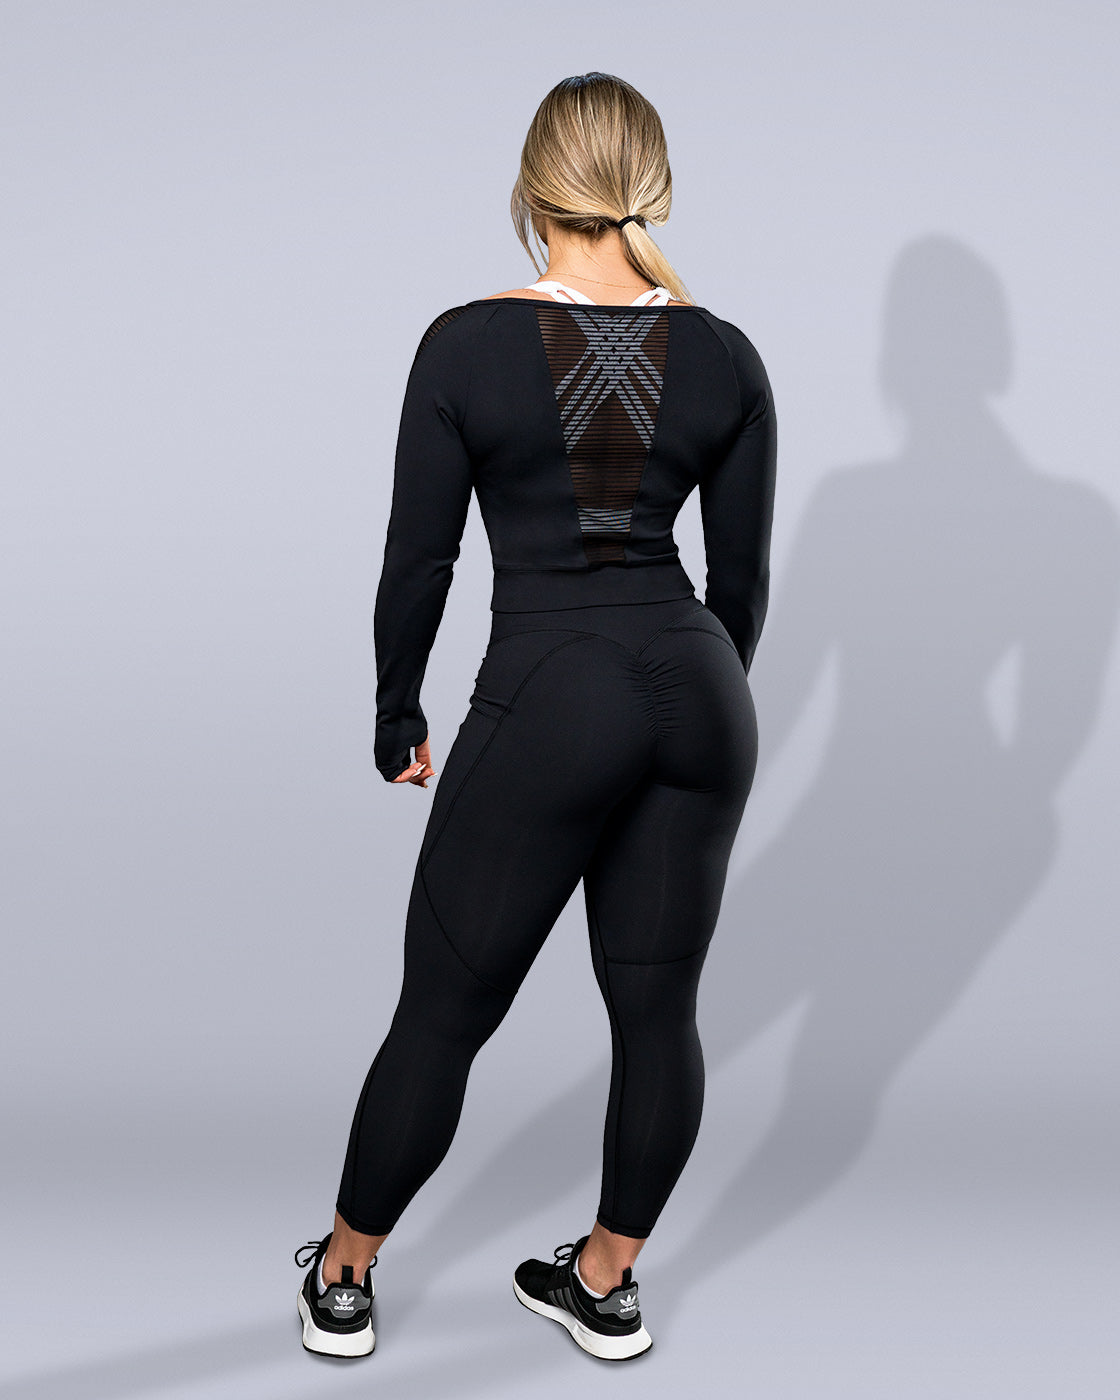 Luxe Black Scrunch Butt Leggings - Violate The Dress Code